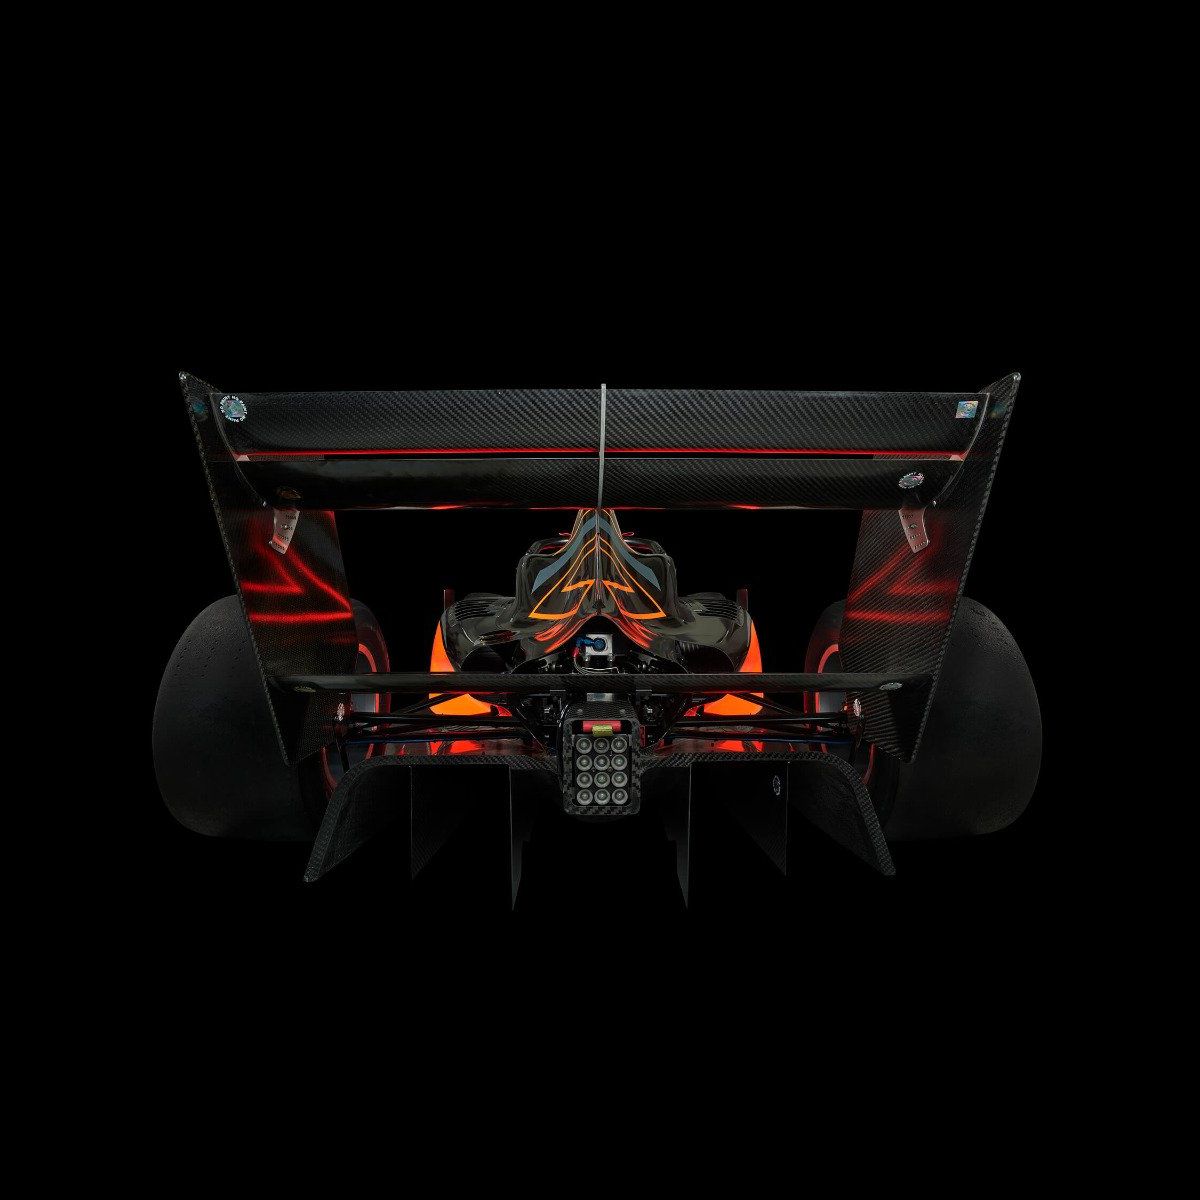 Formula 3 - Lower rear view - dark